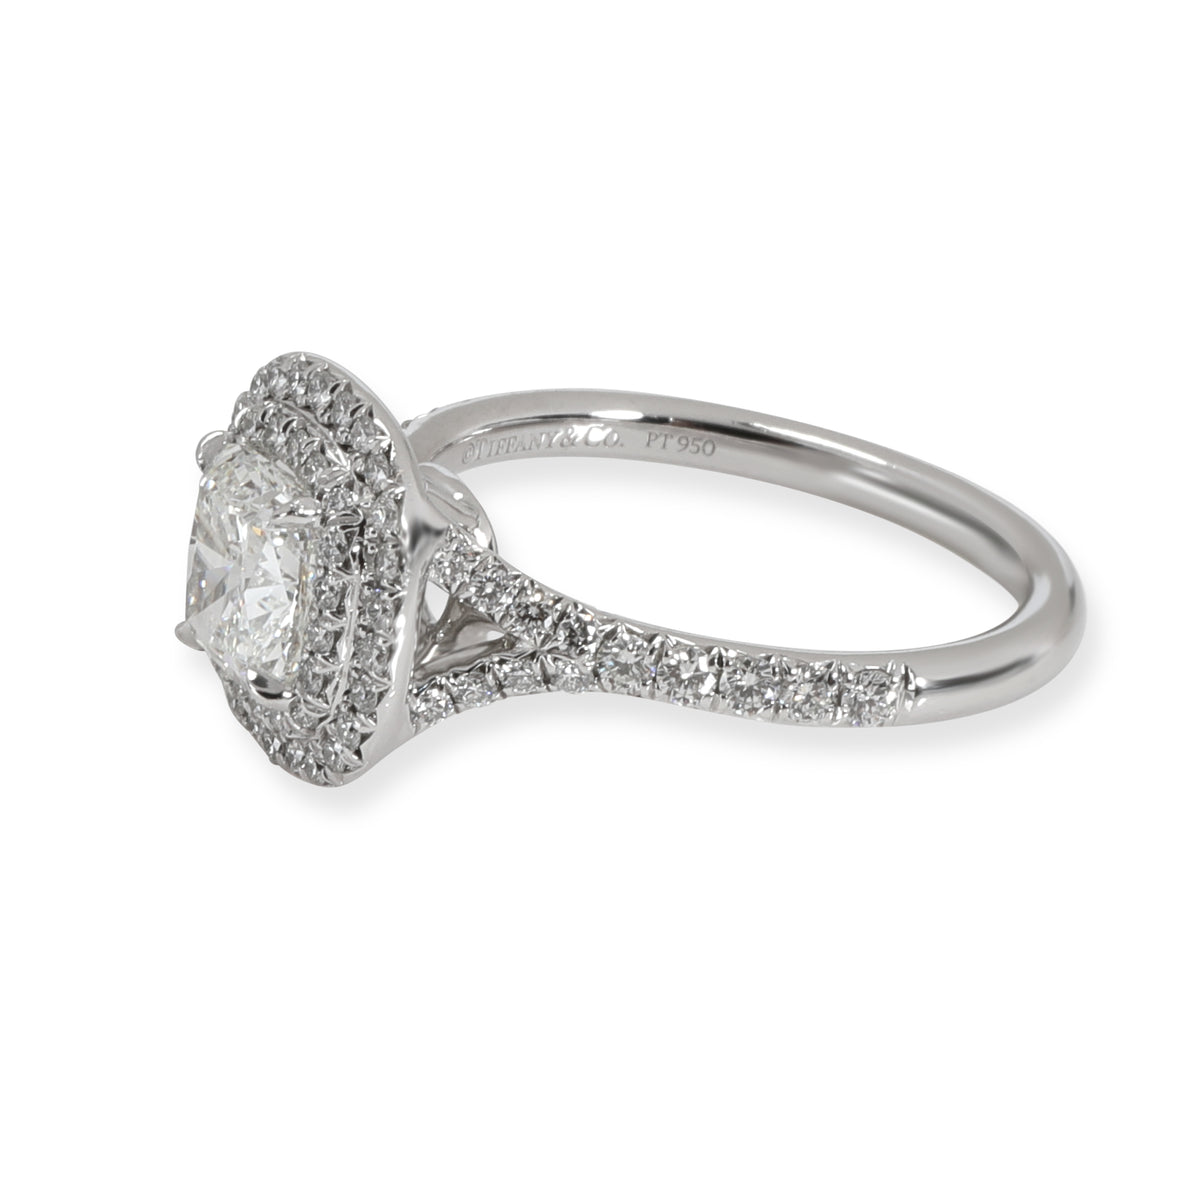 Tiffany & Co. Soleste Diamond Engagement Ring in Platinum G VVS 1.31 ctw